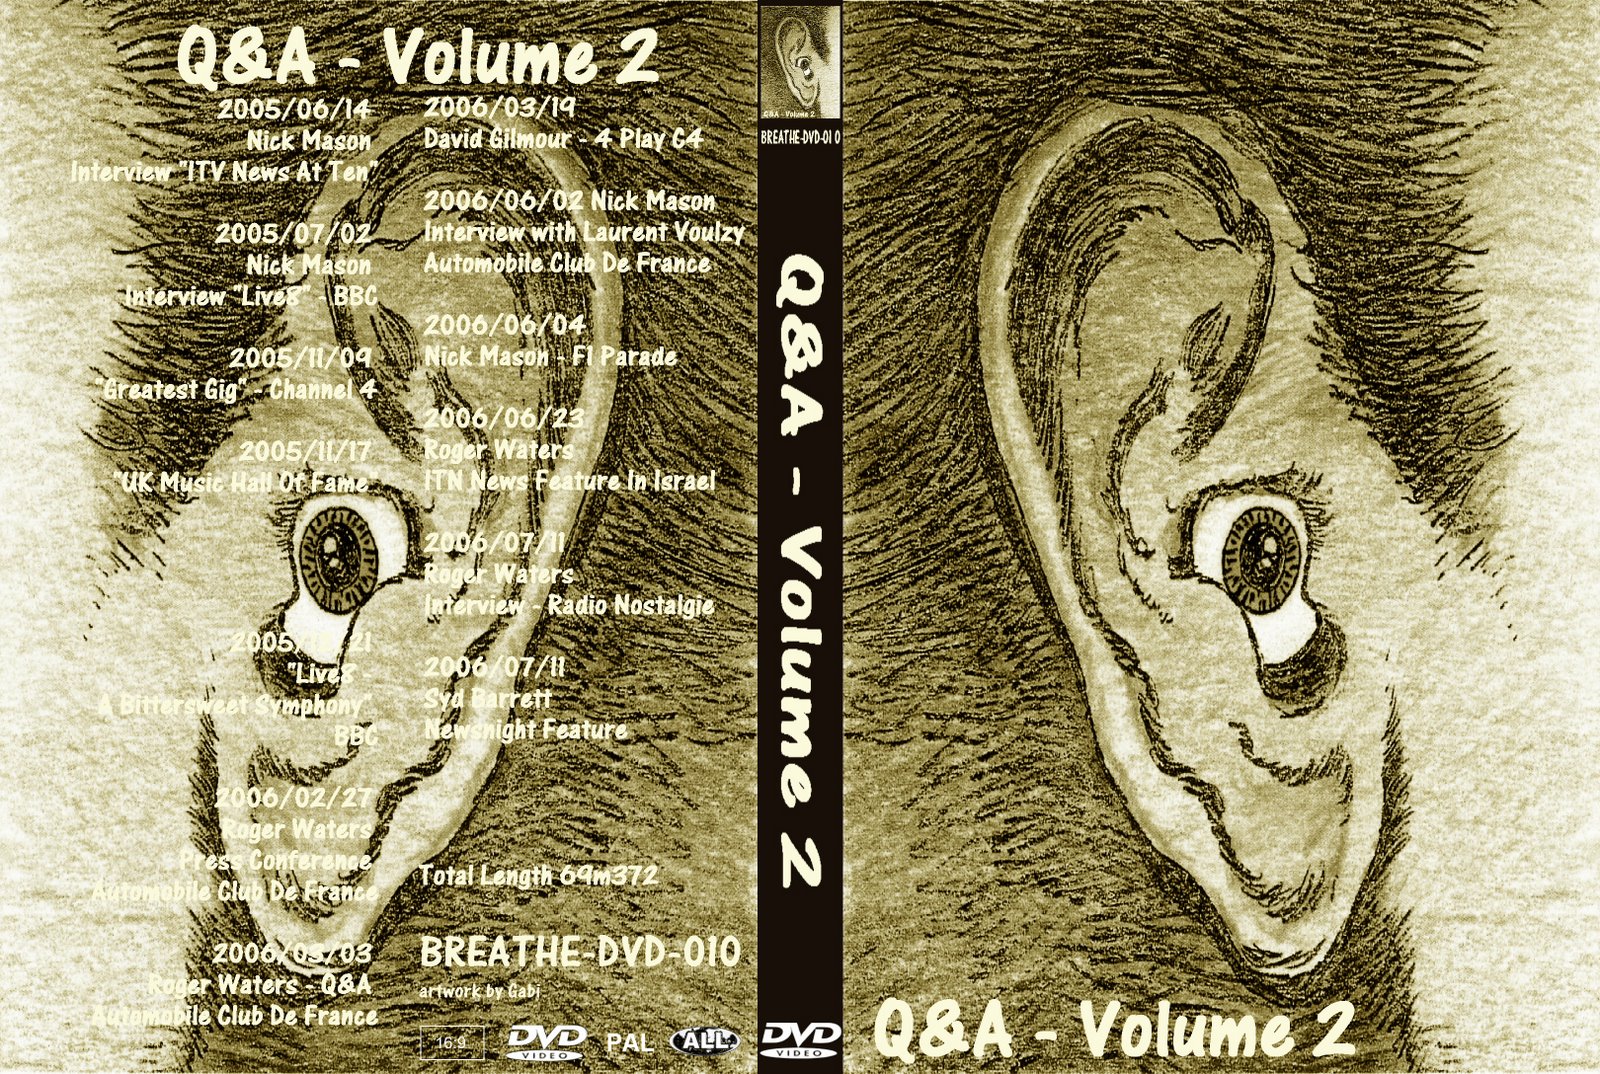 [Breathe-DVD-010_2005+-+2006_Q&A+-+Volume+2.jpg]